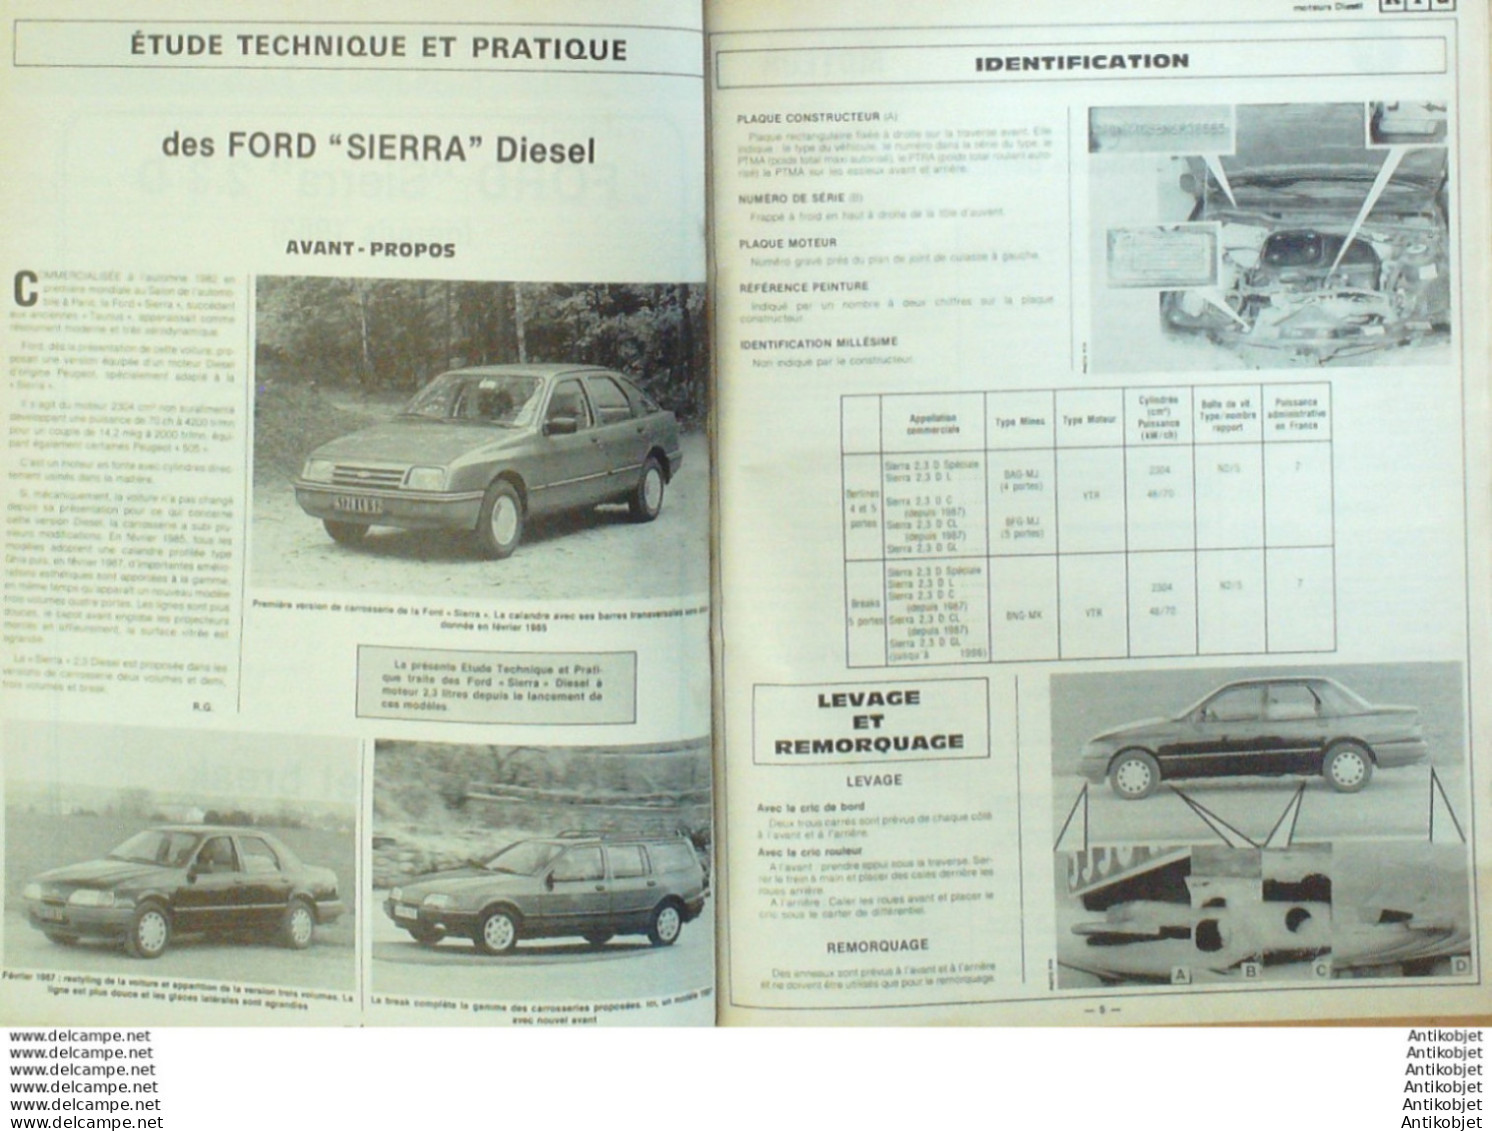 Revue Technique Automobile Ford Sierra 2.3D Renault 11 & 9 Mazda 121   N°492 - Auto/Motor